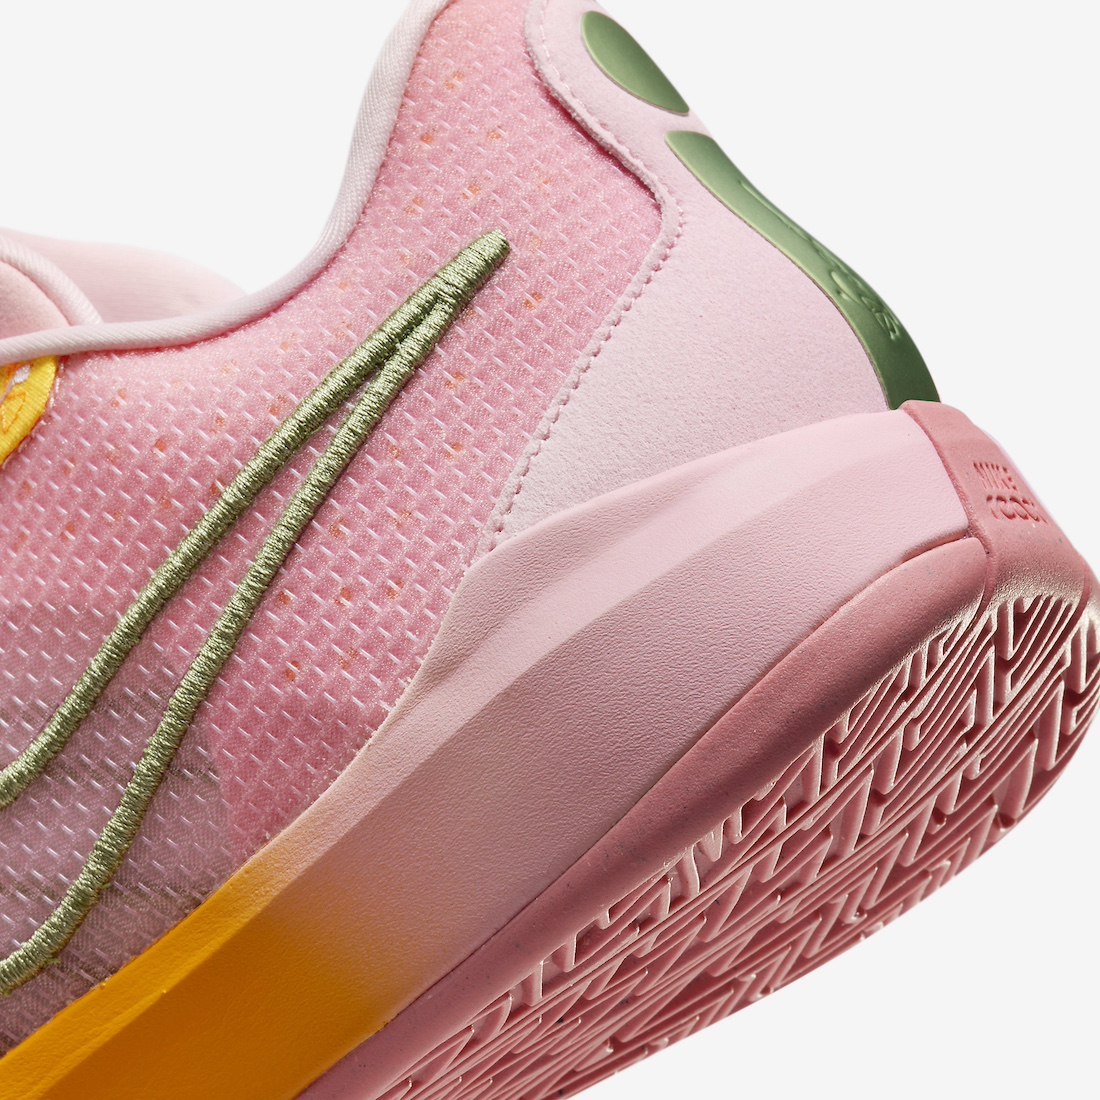 Nike-Sabrina-1-Medium-Soft-Pink-Orange-7.jpeg